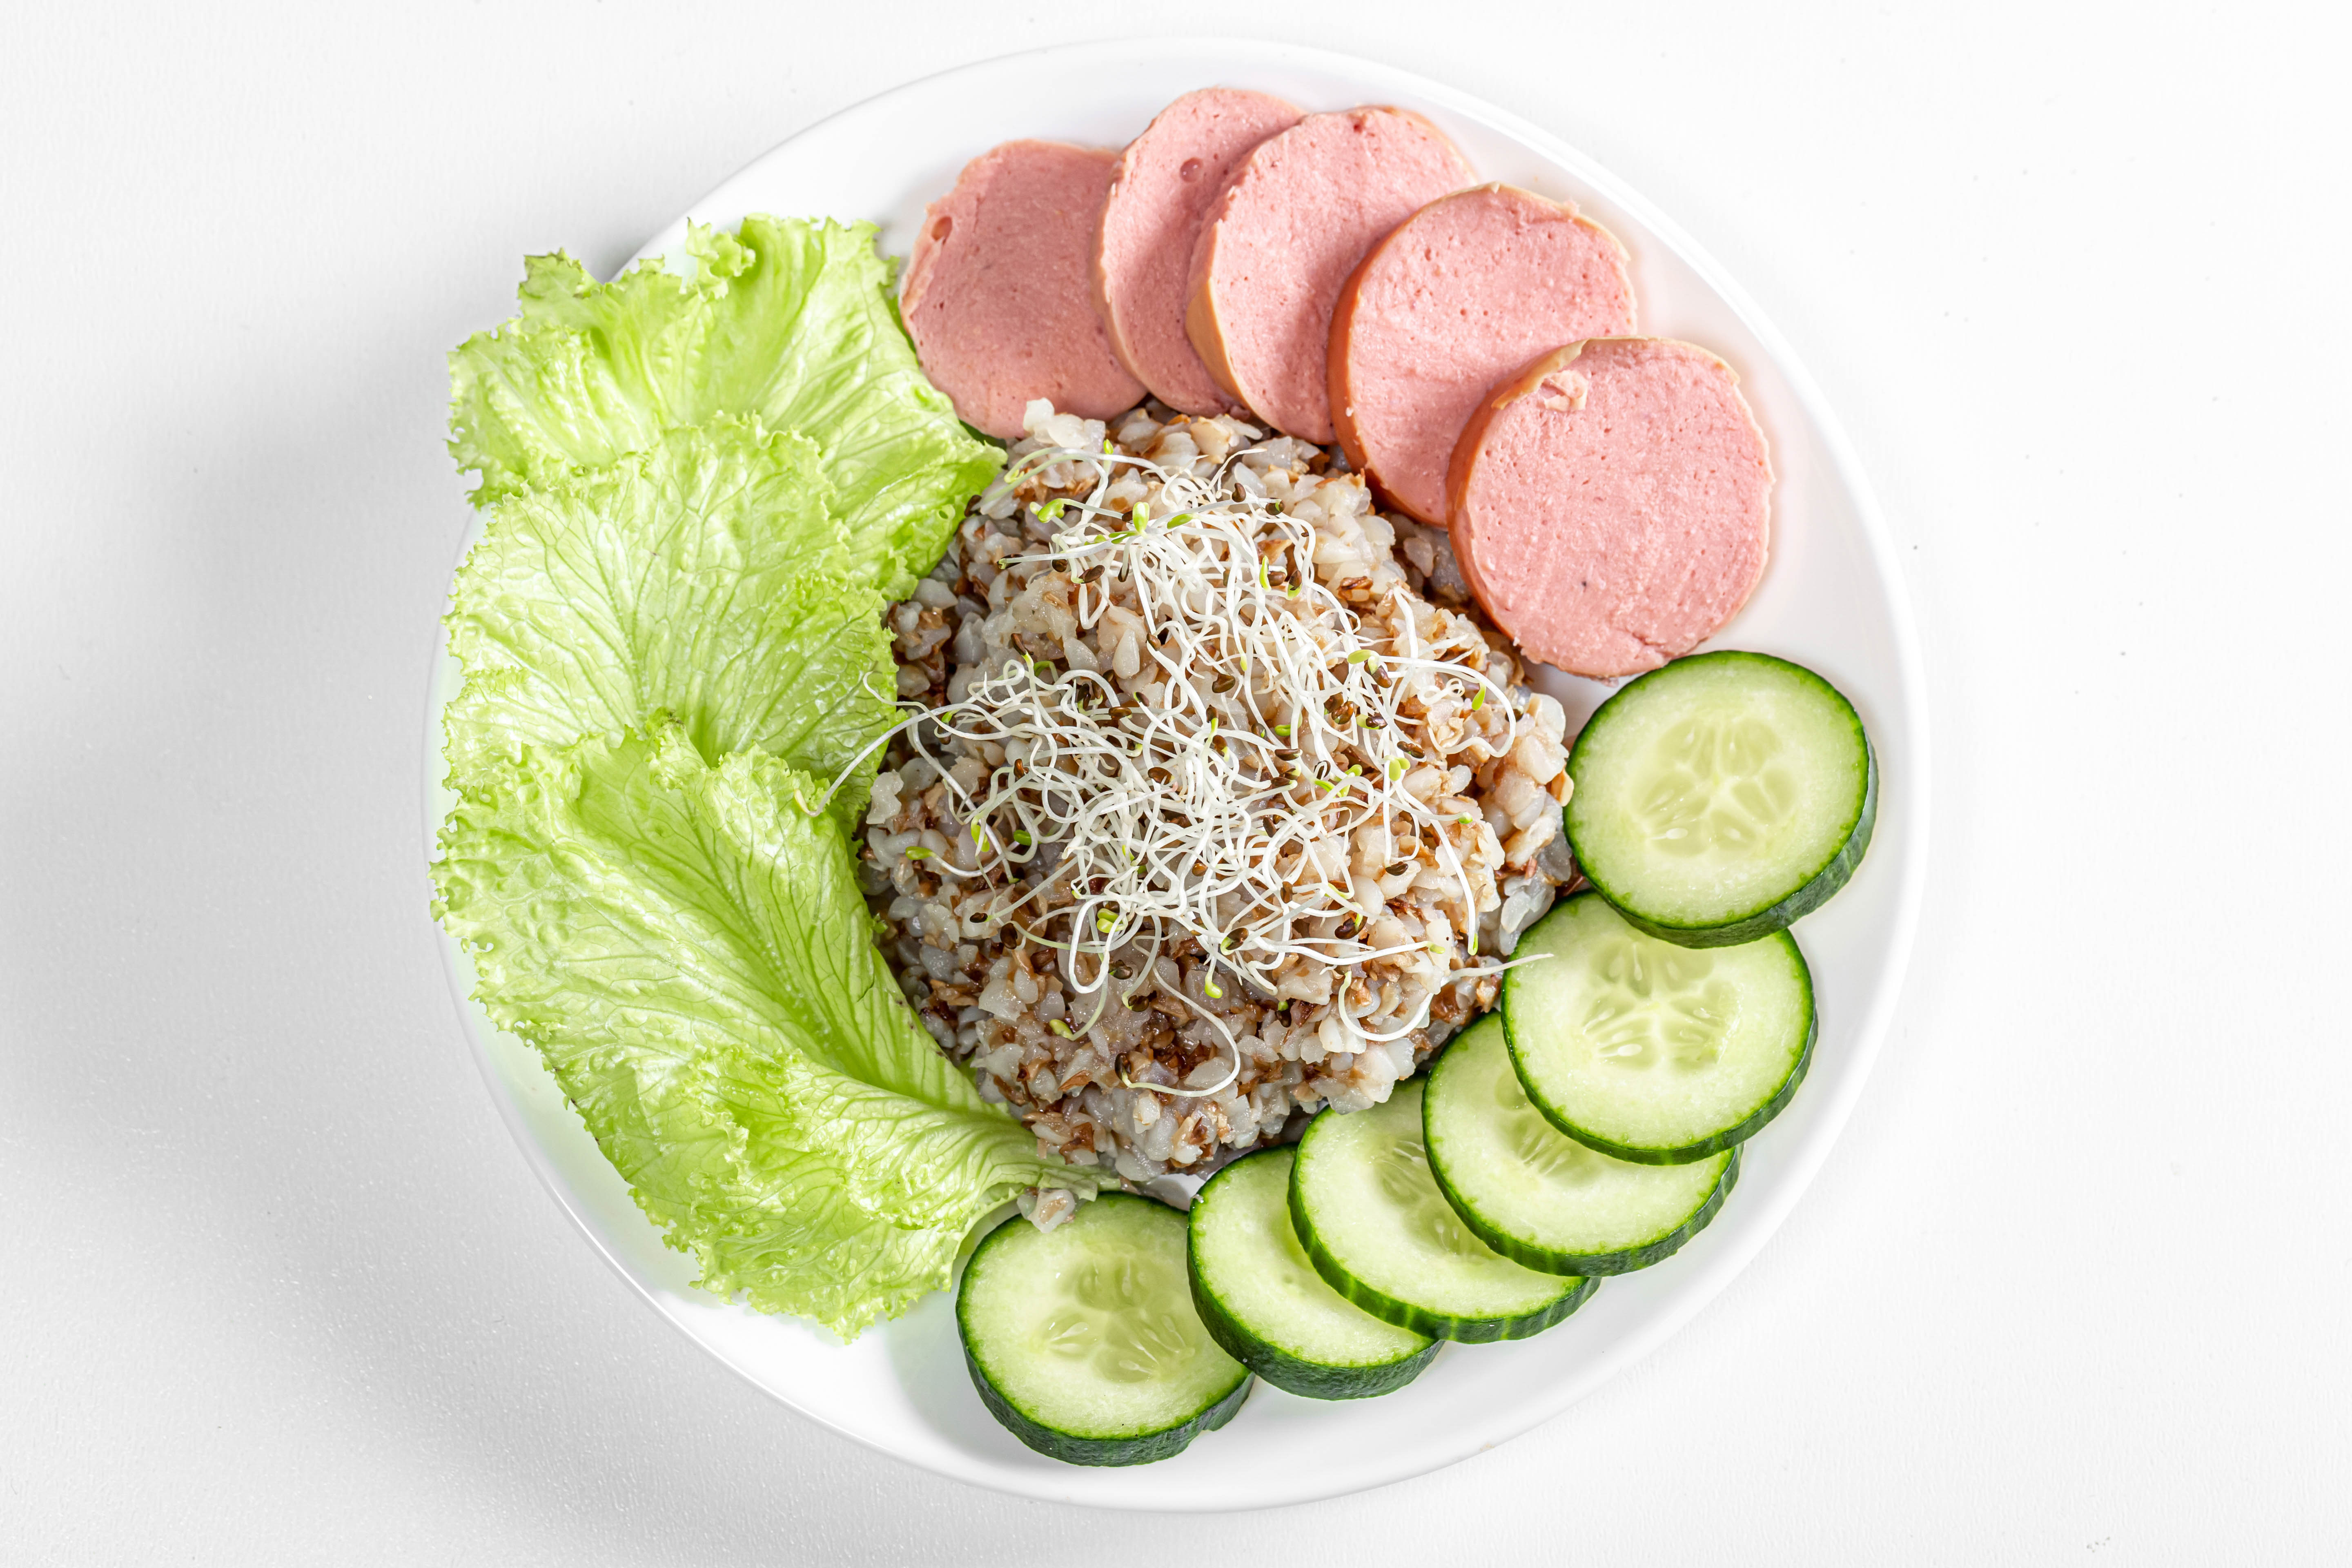 Zastaki.com - Гречка на тарелке с огурцом, колбасой и листьями салата на белом фоне